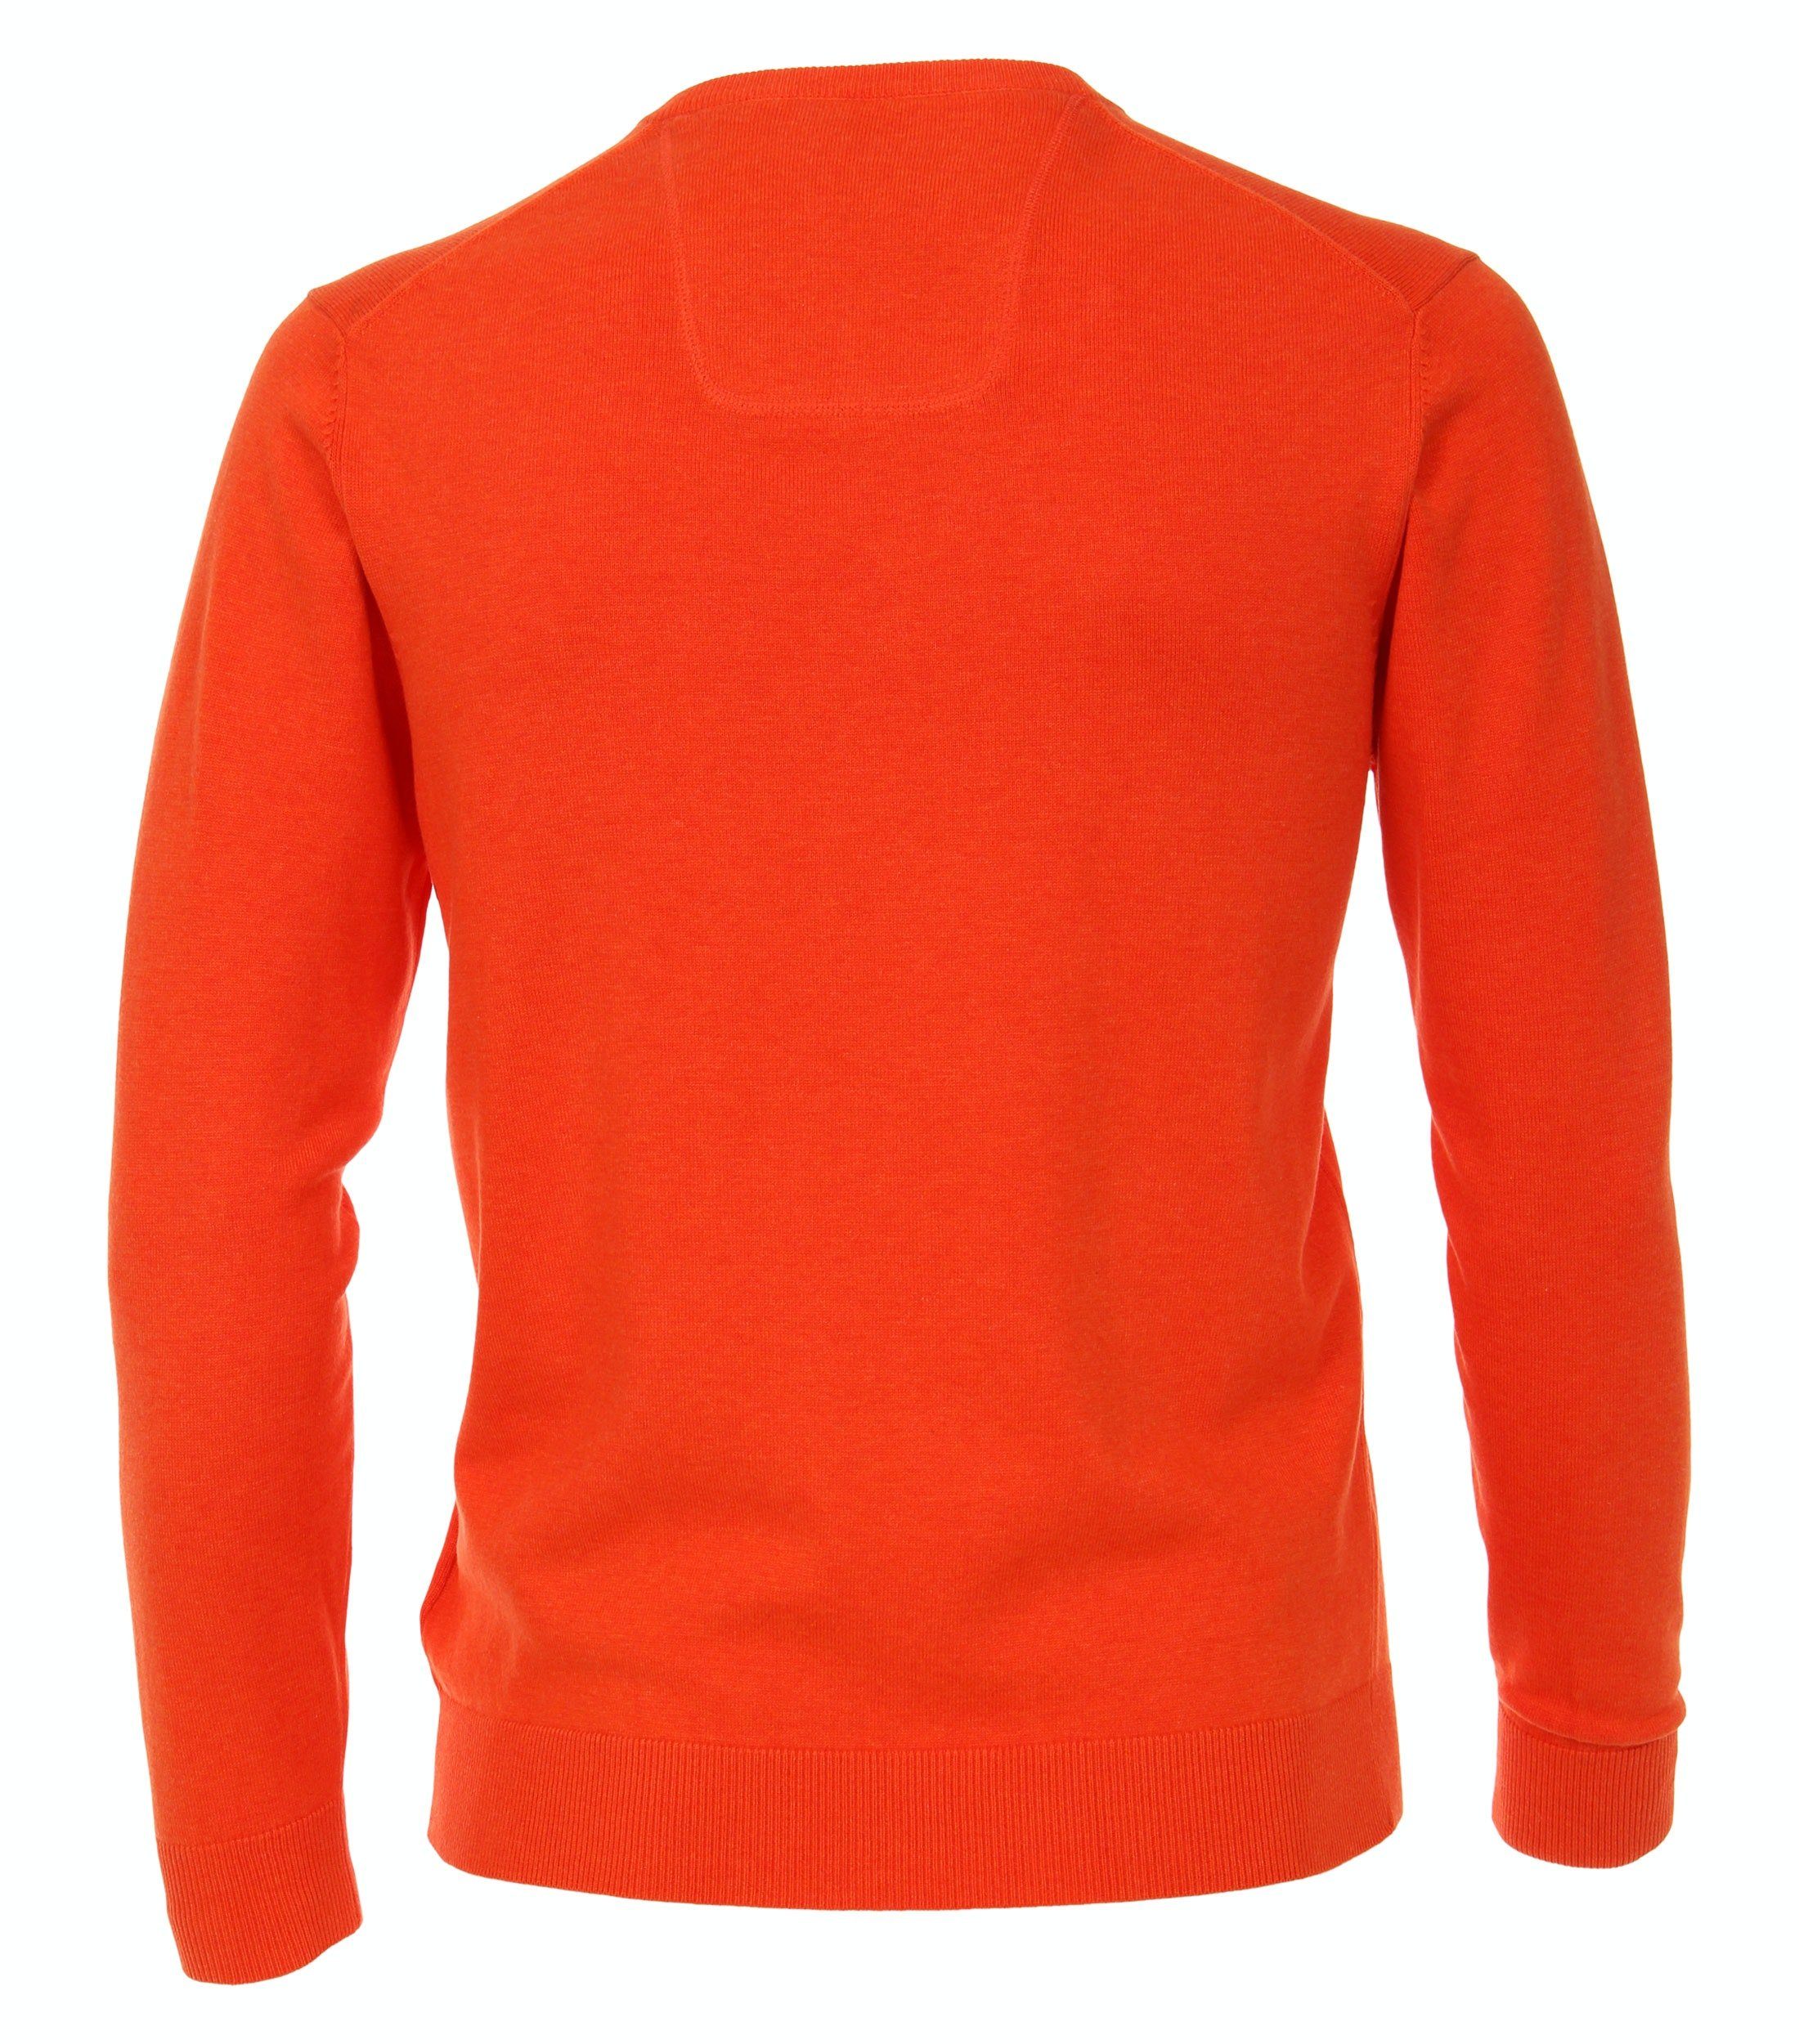 Pima-Baumwolle orange450 CASAMODA 004430 V-Ausschnitt-Pullover